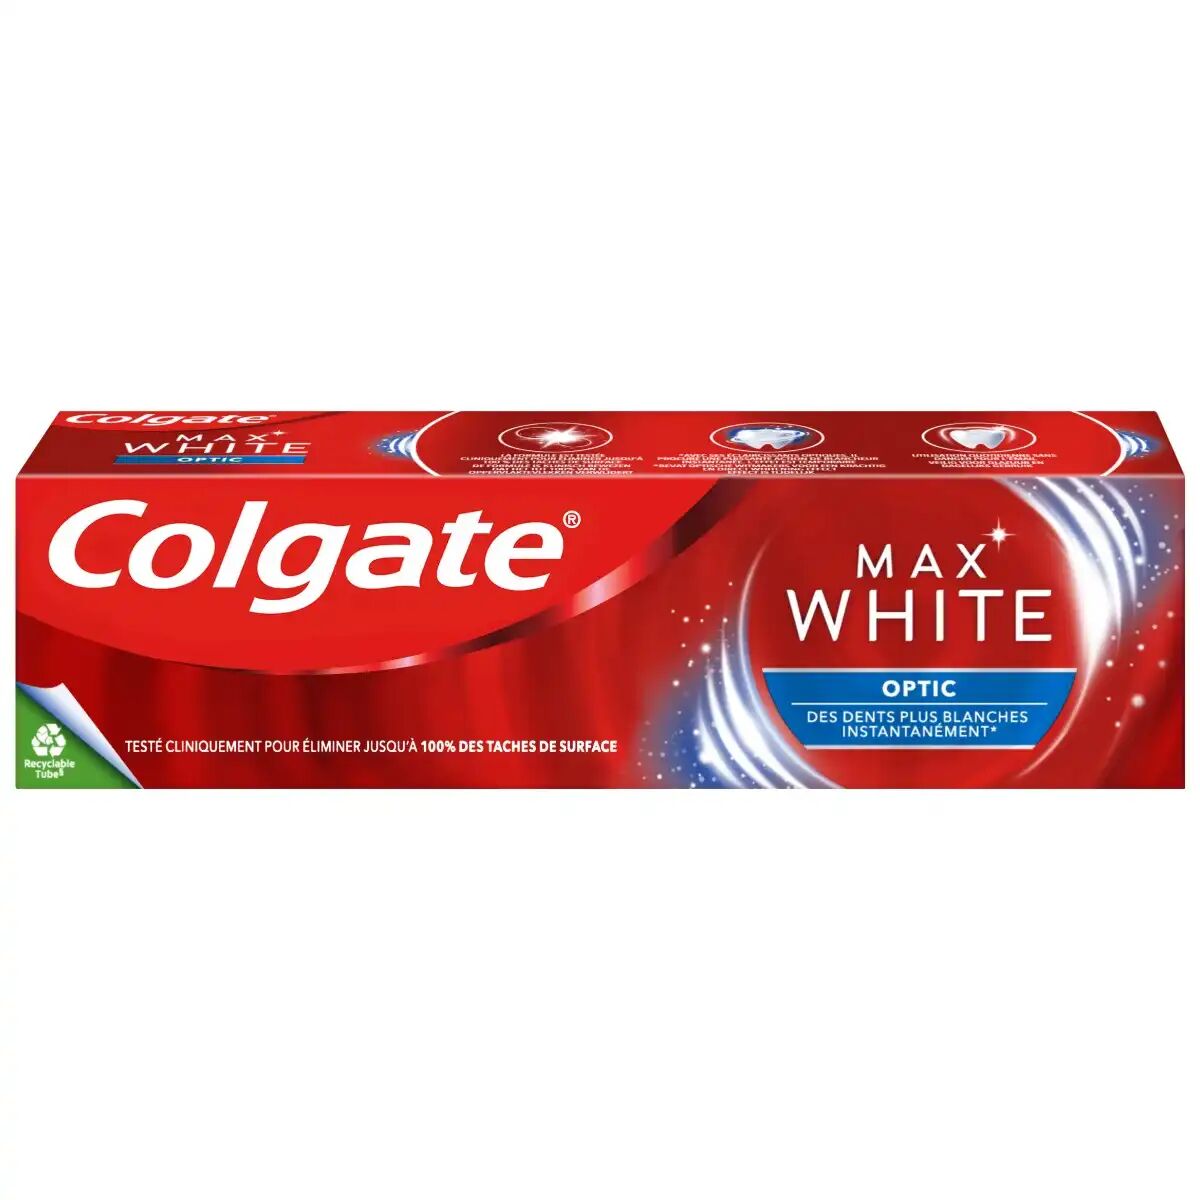 Colgate MAX WHITE OPTIC - Dentifrice  Blancheur au Fluor, 75ml